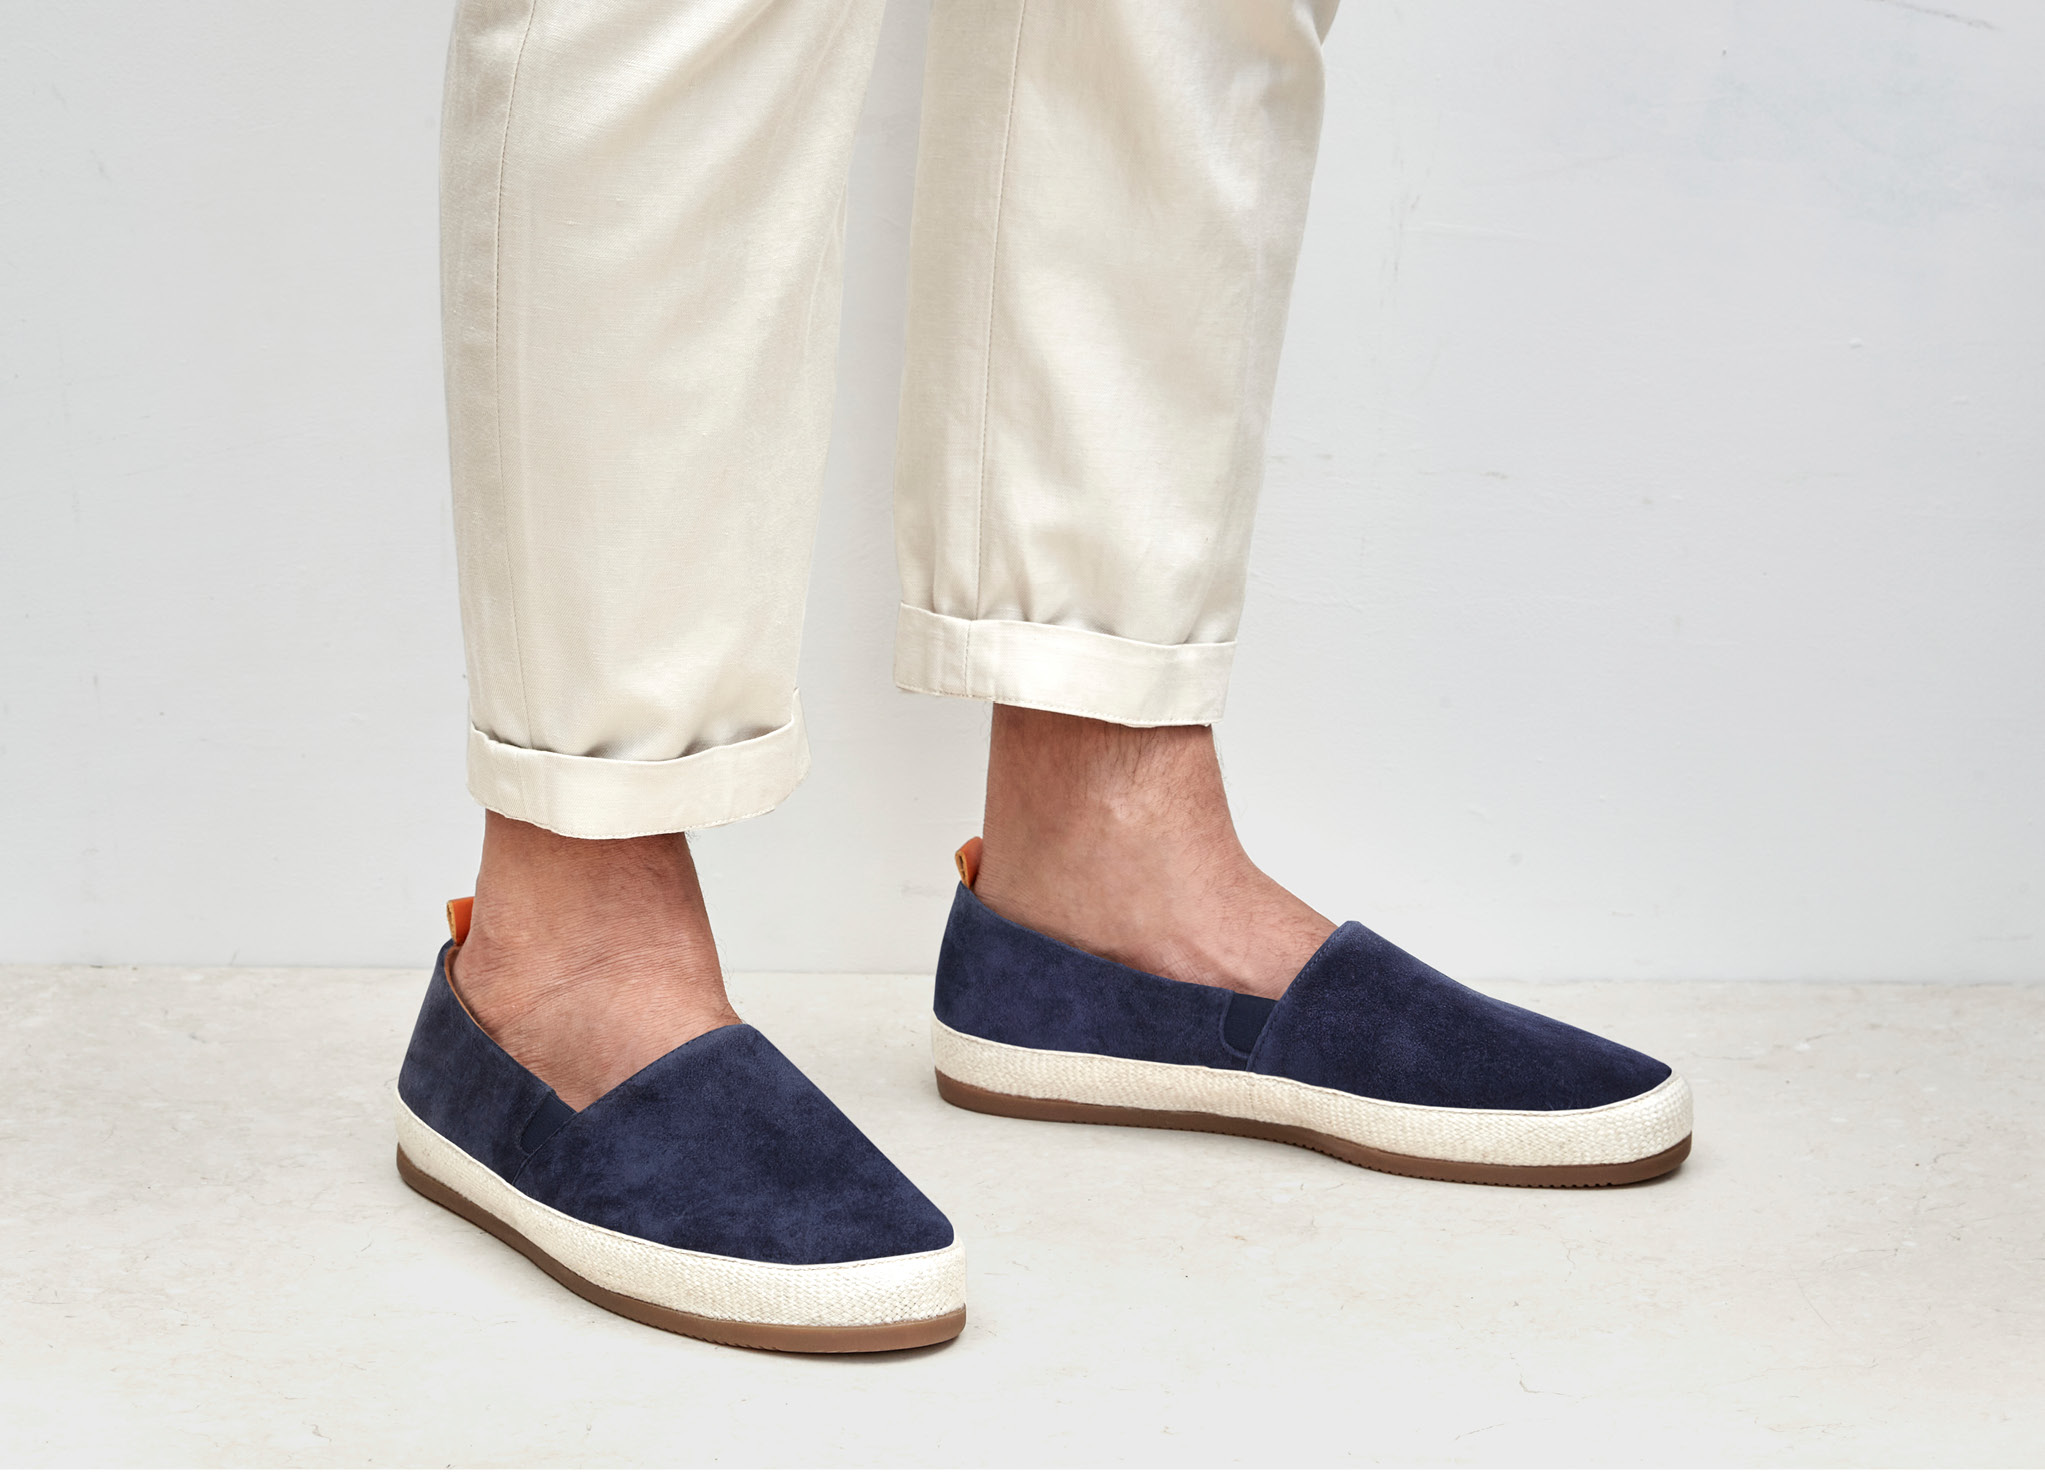 Navy Espadrilles for Men | MULO shoes | Handmade Premium Suede